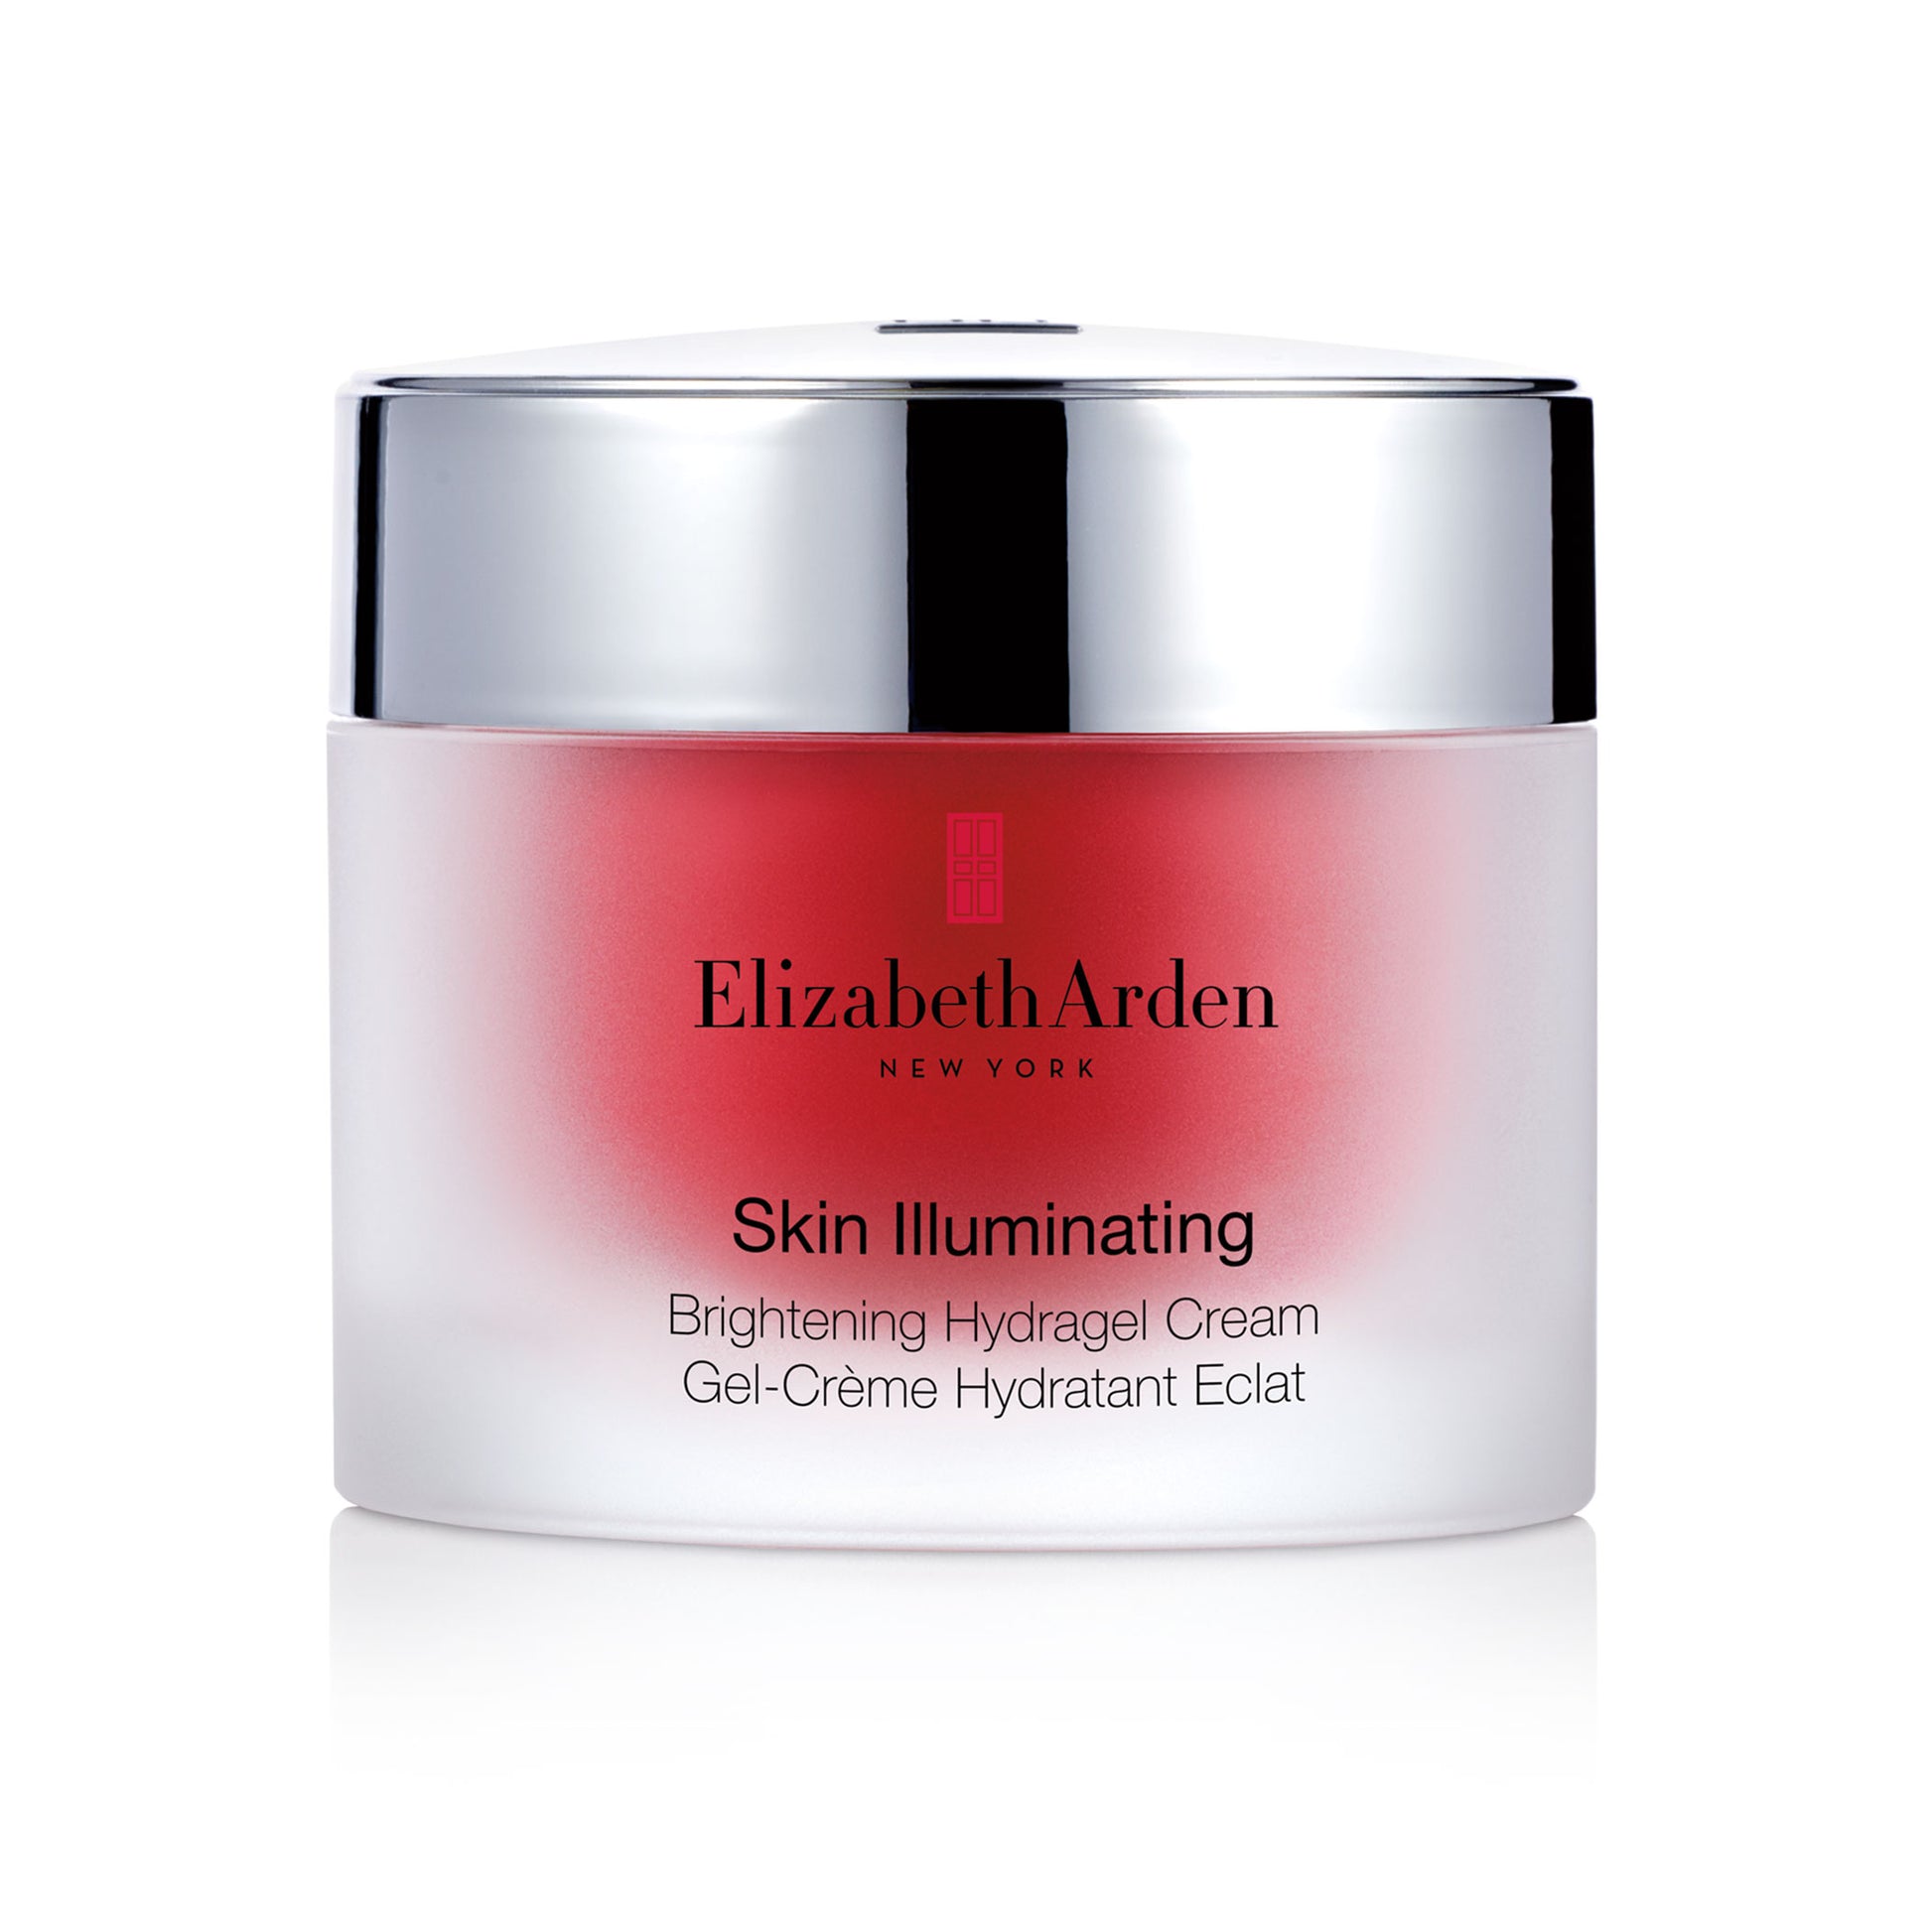 Buy Elizabeth Arden Skin Illuminating Brightening Hydragel Cream - 50ml in Pakistan